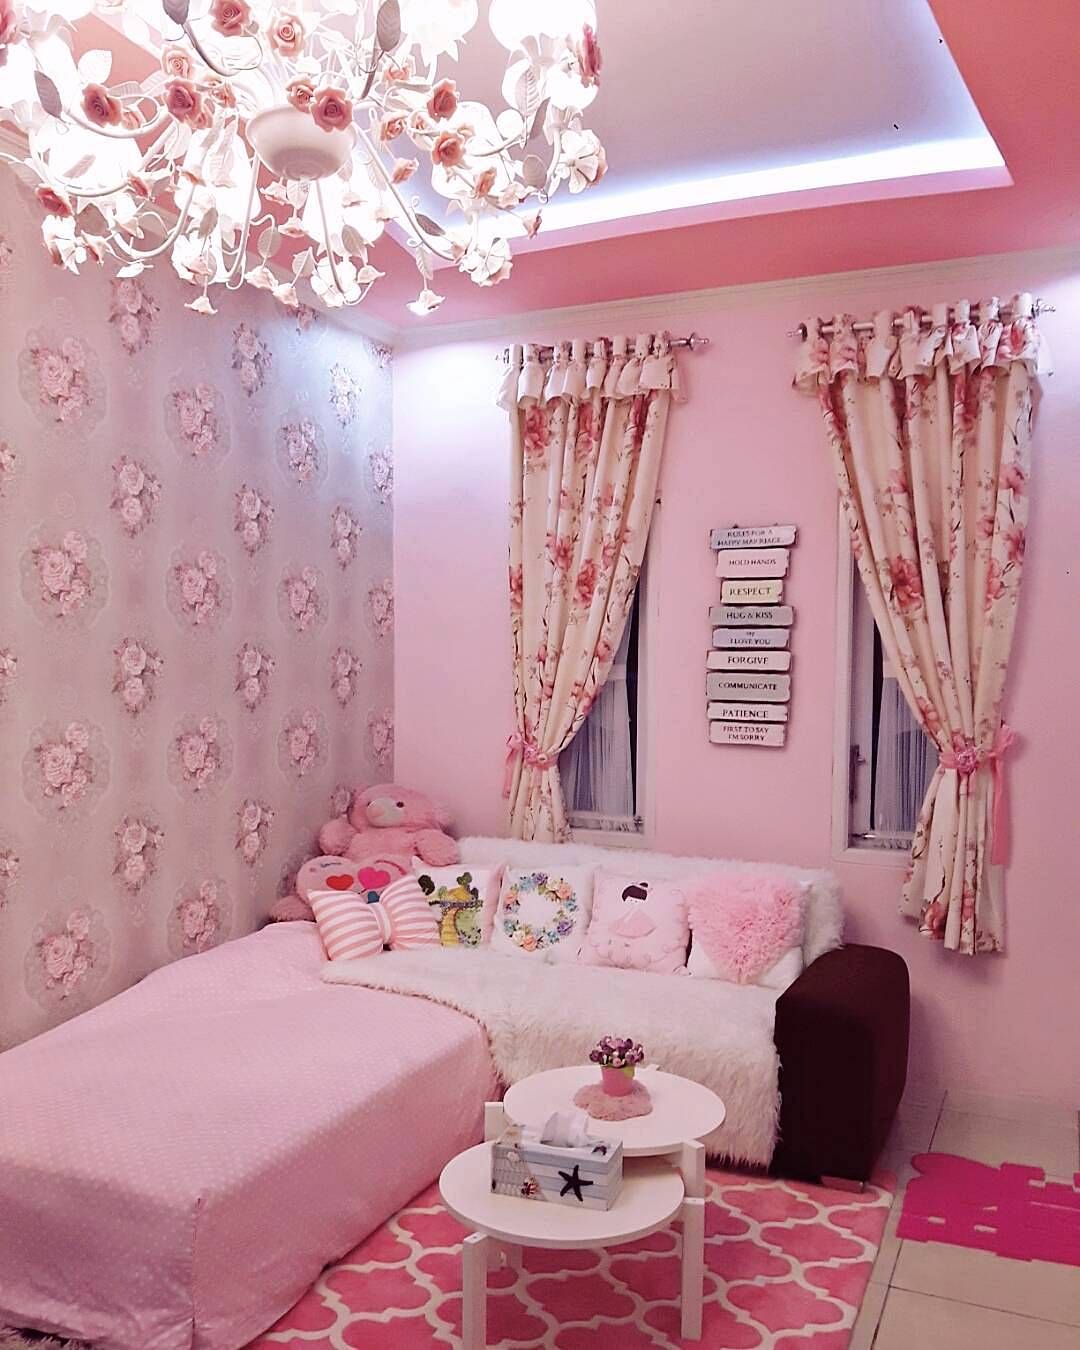 tapete dinding ruang tamu minimalis,rosa,zimmer,innenarchitektur,möbel,vorhang